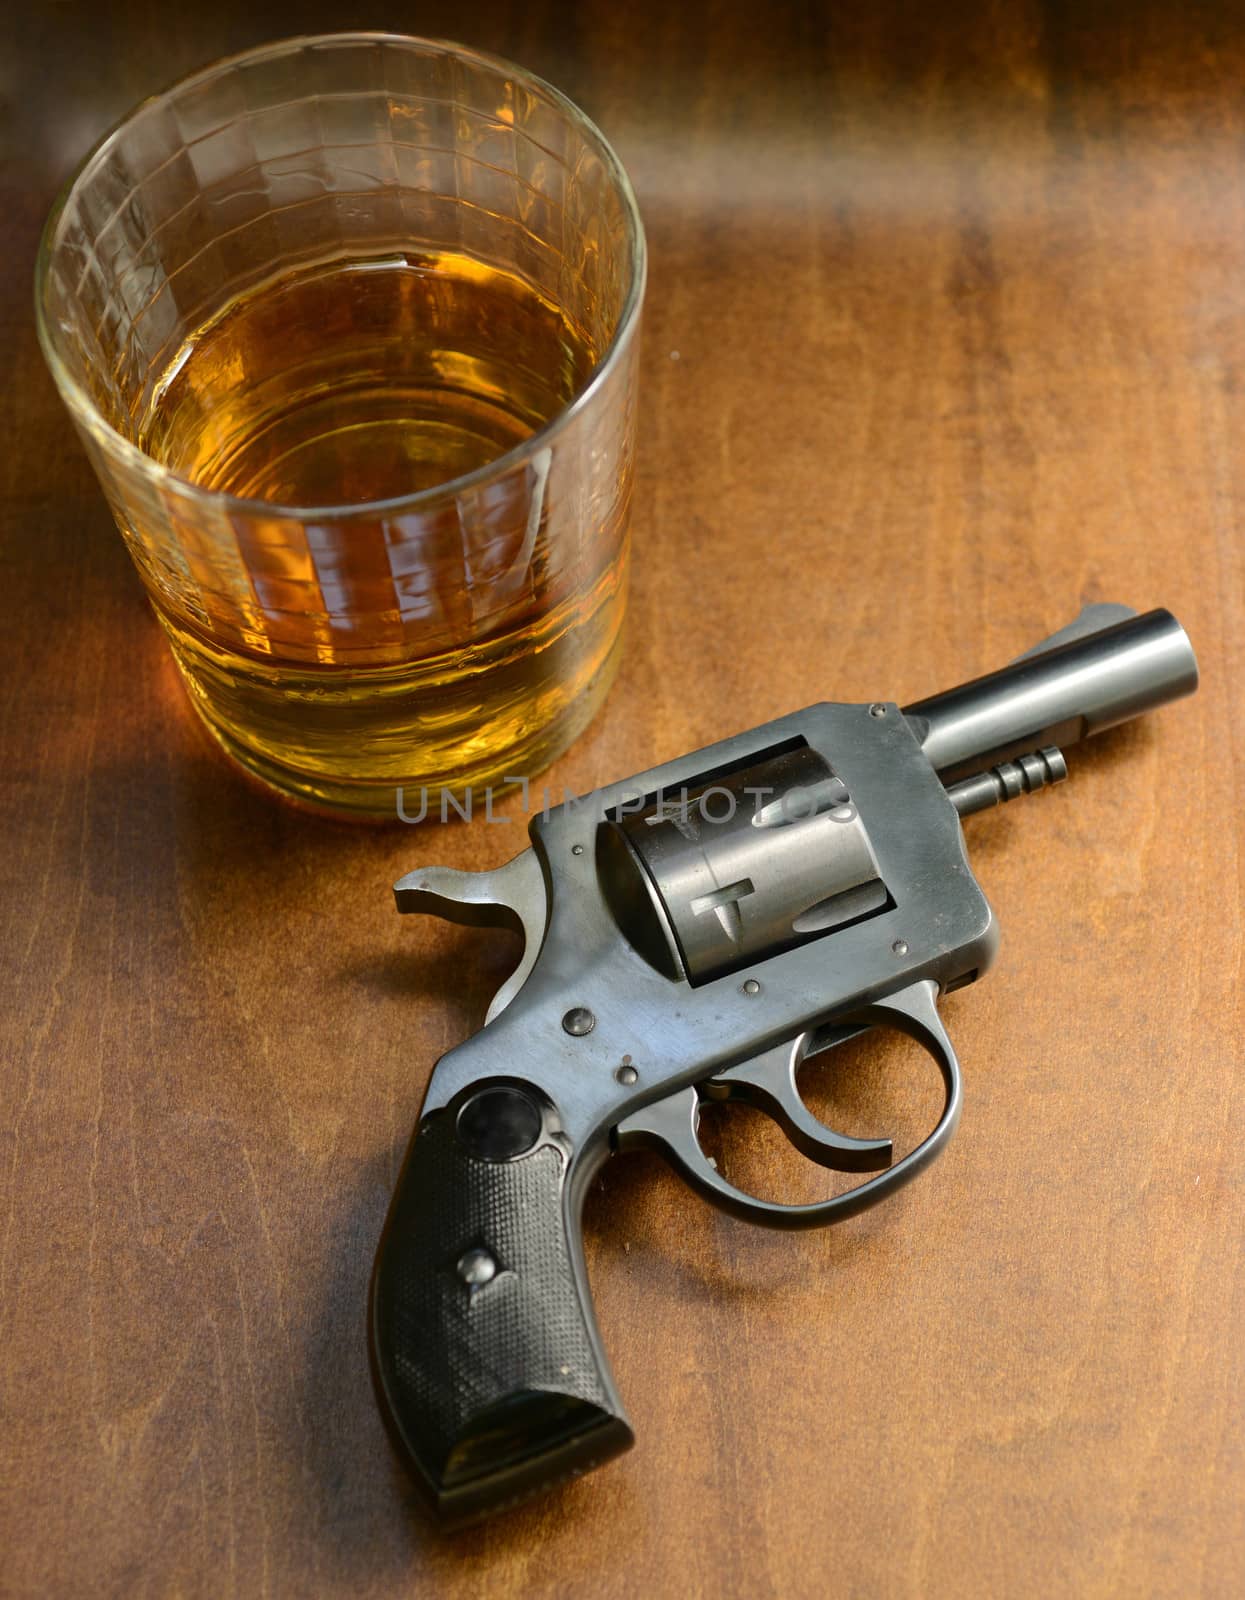 gun and alcohol by ftlaudgirl